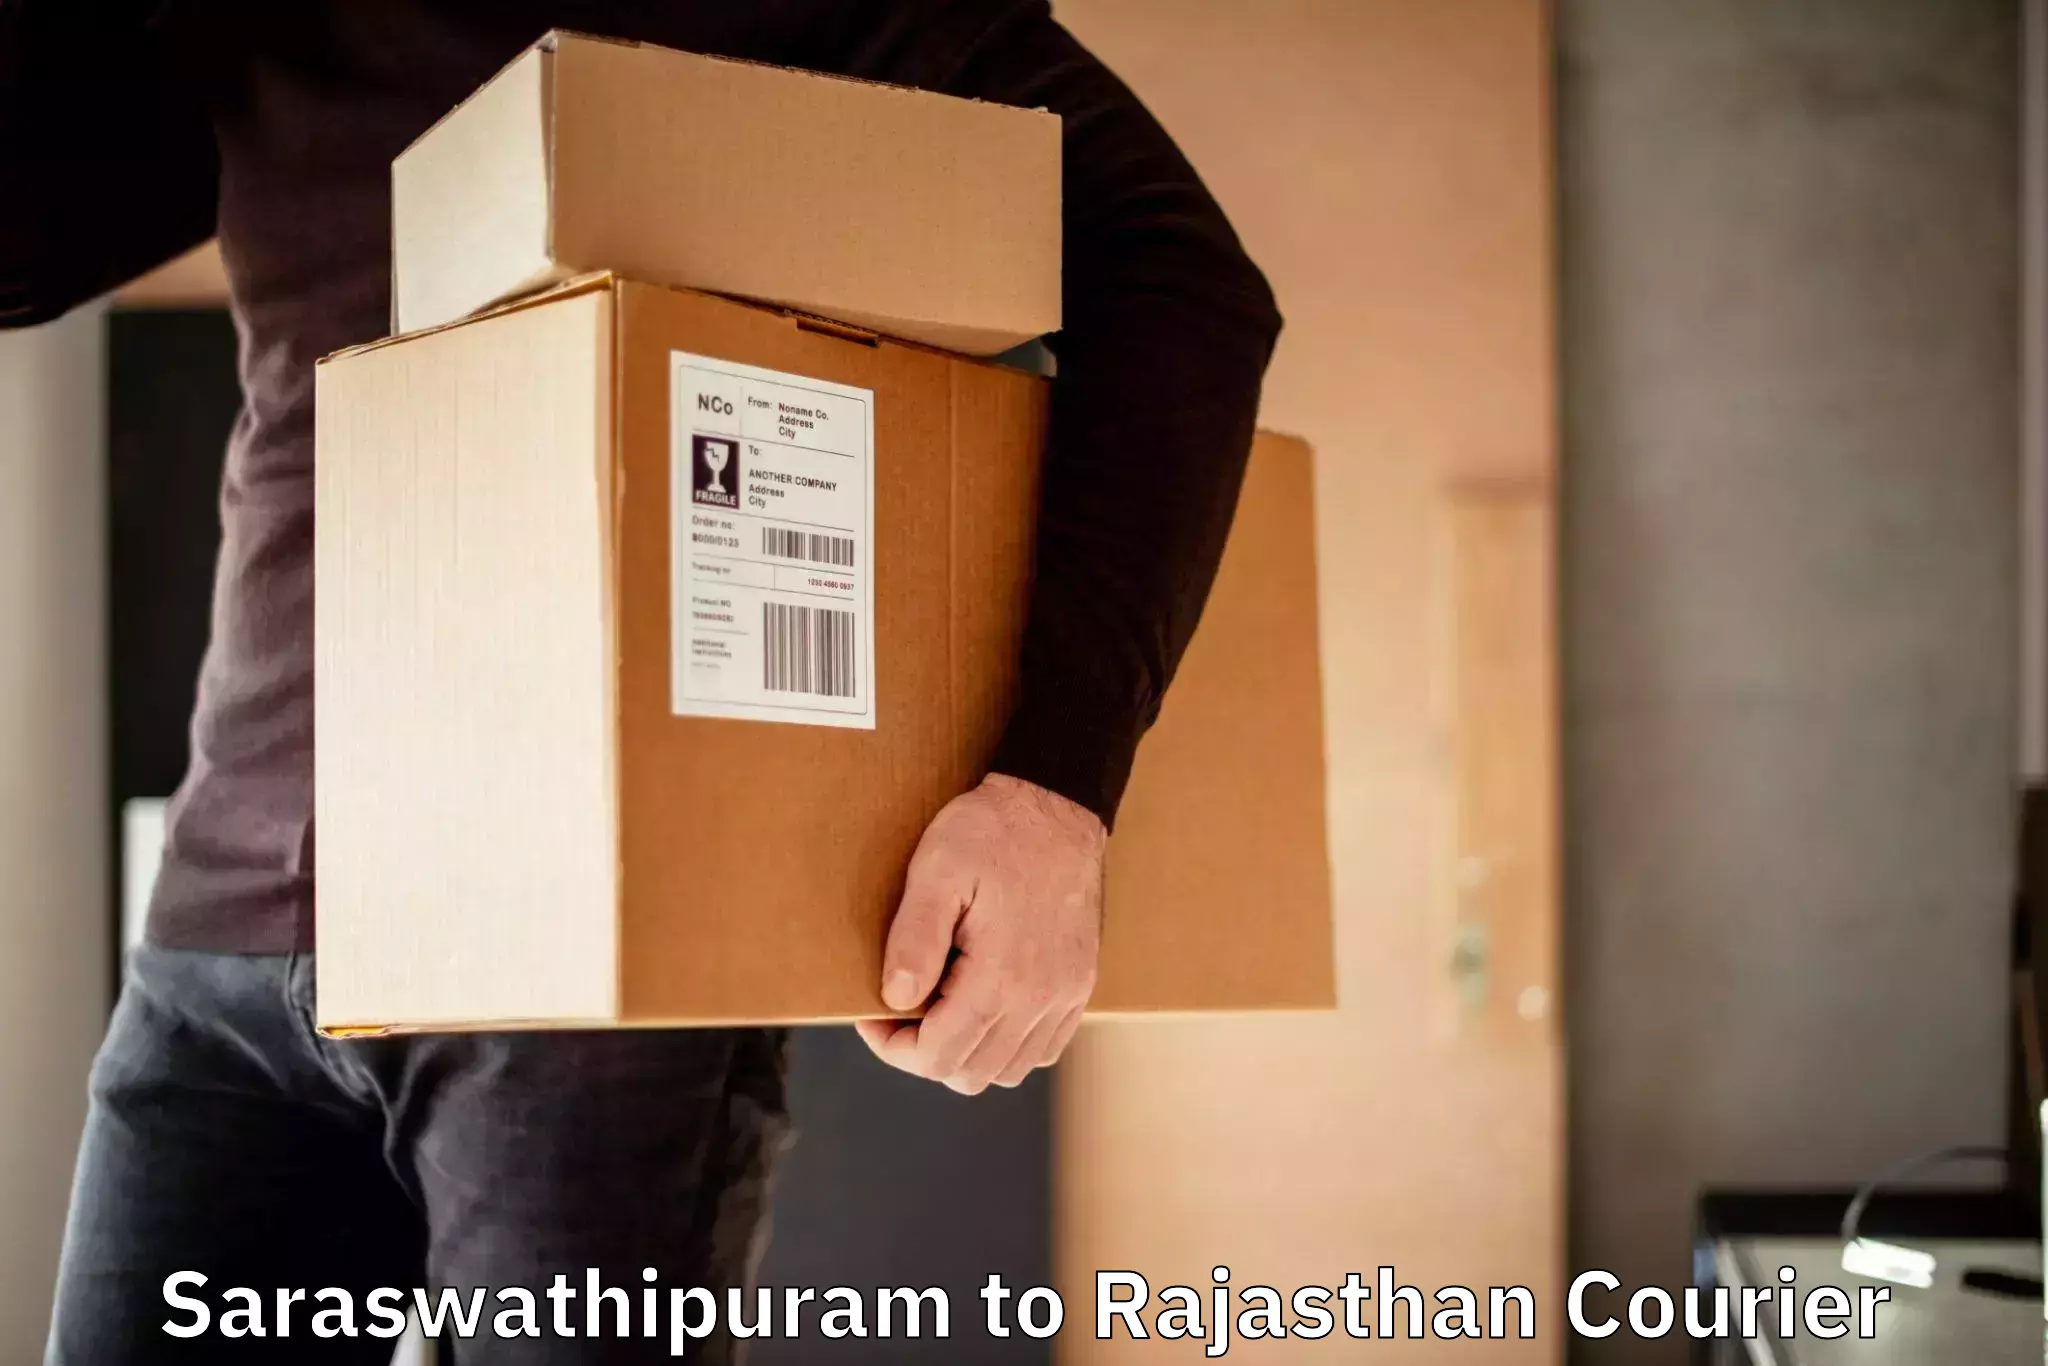 Reliable delivery network Saraswathipuram to Gudha Gorji